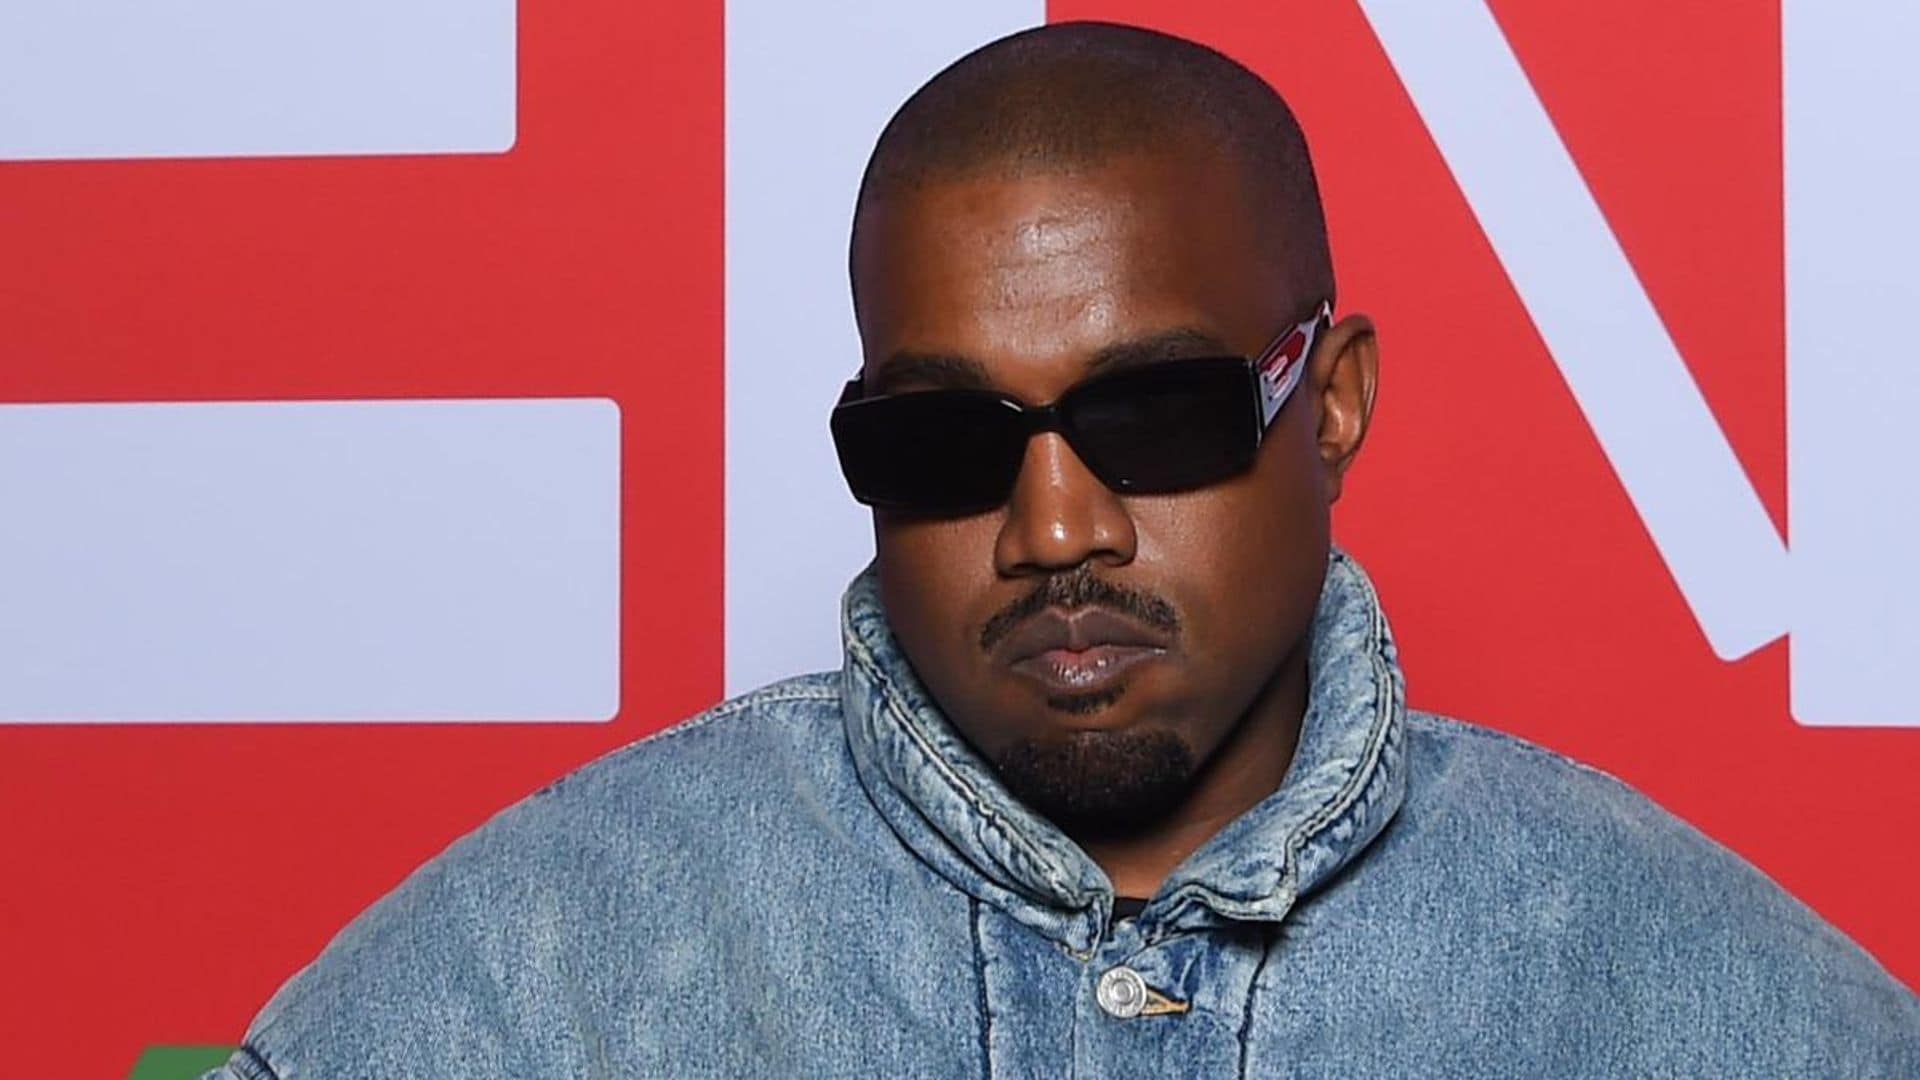 Kanye West gets suspended from Instagram after violating the platform’s policies on hate speech